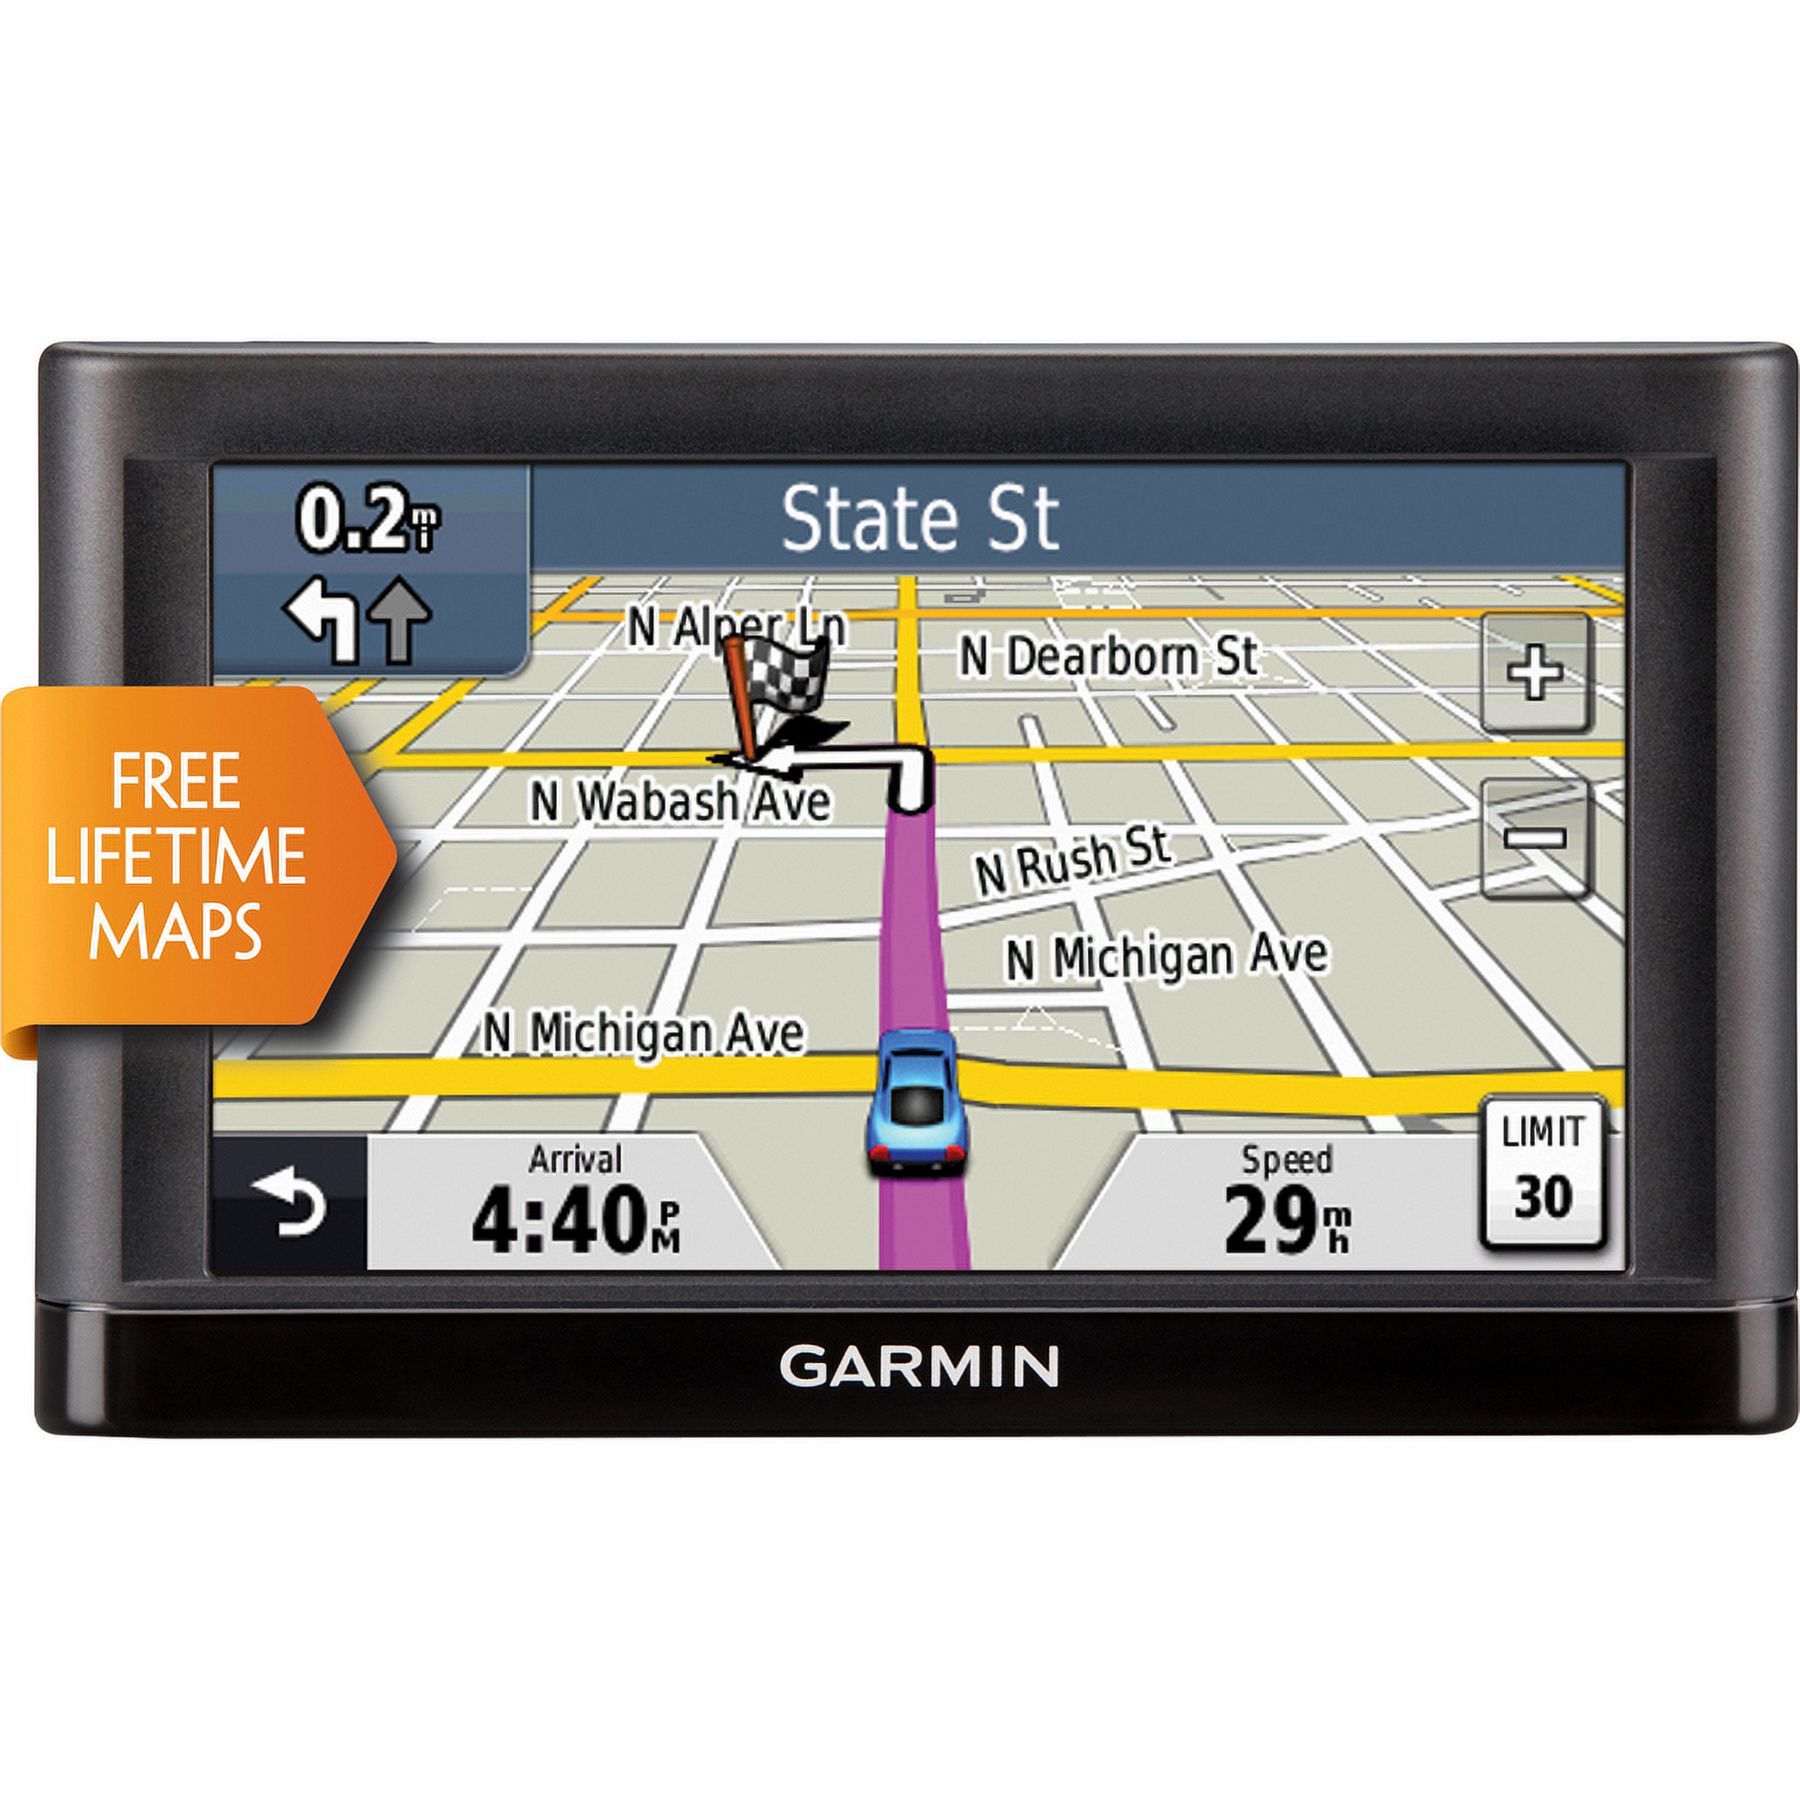 Garmin n��vi 52LM Automobile Portable GPS Navigator - image 3 of 3